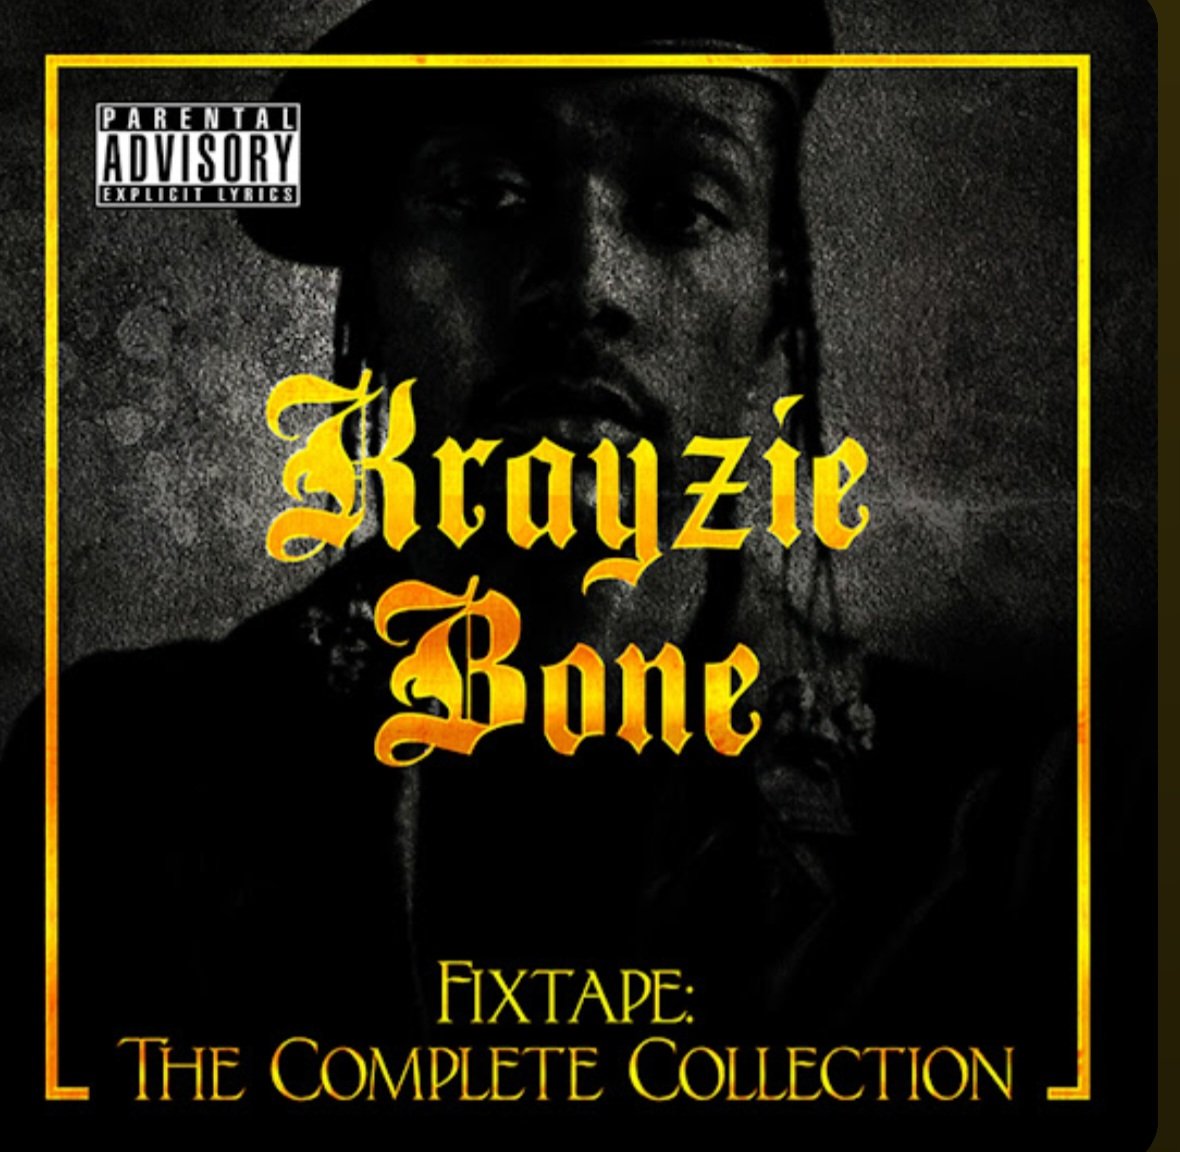 #mixtapemonday #fixtape #krayziebone 💥💥💥